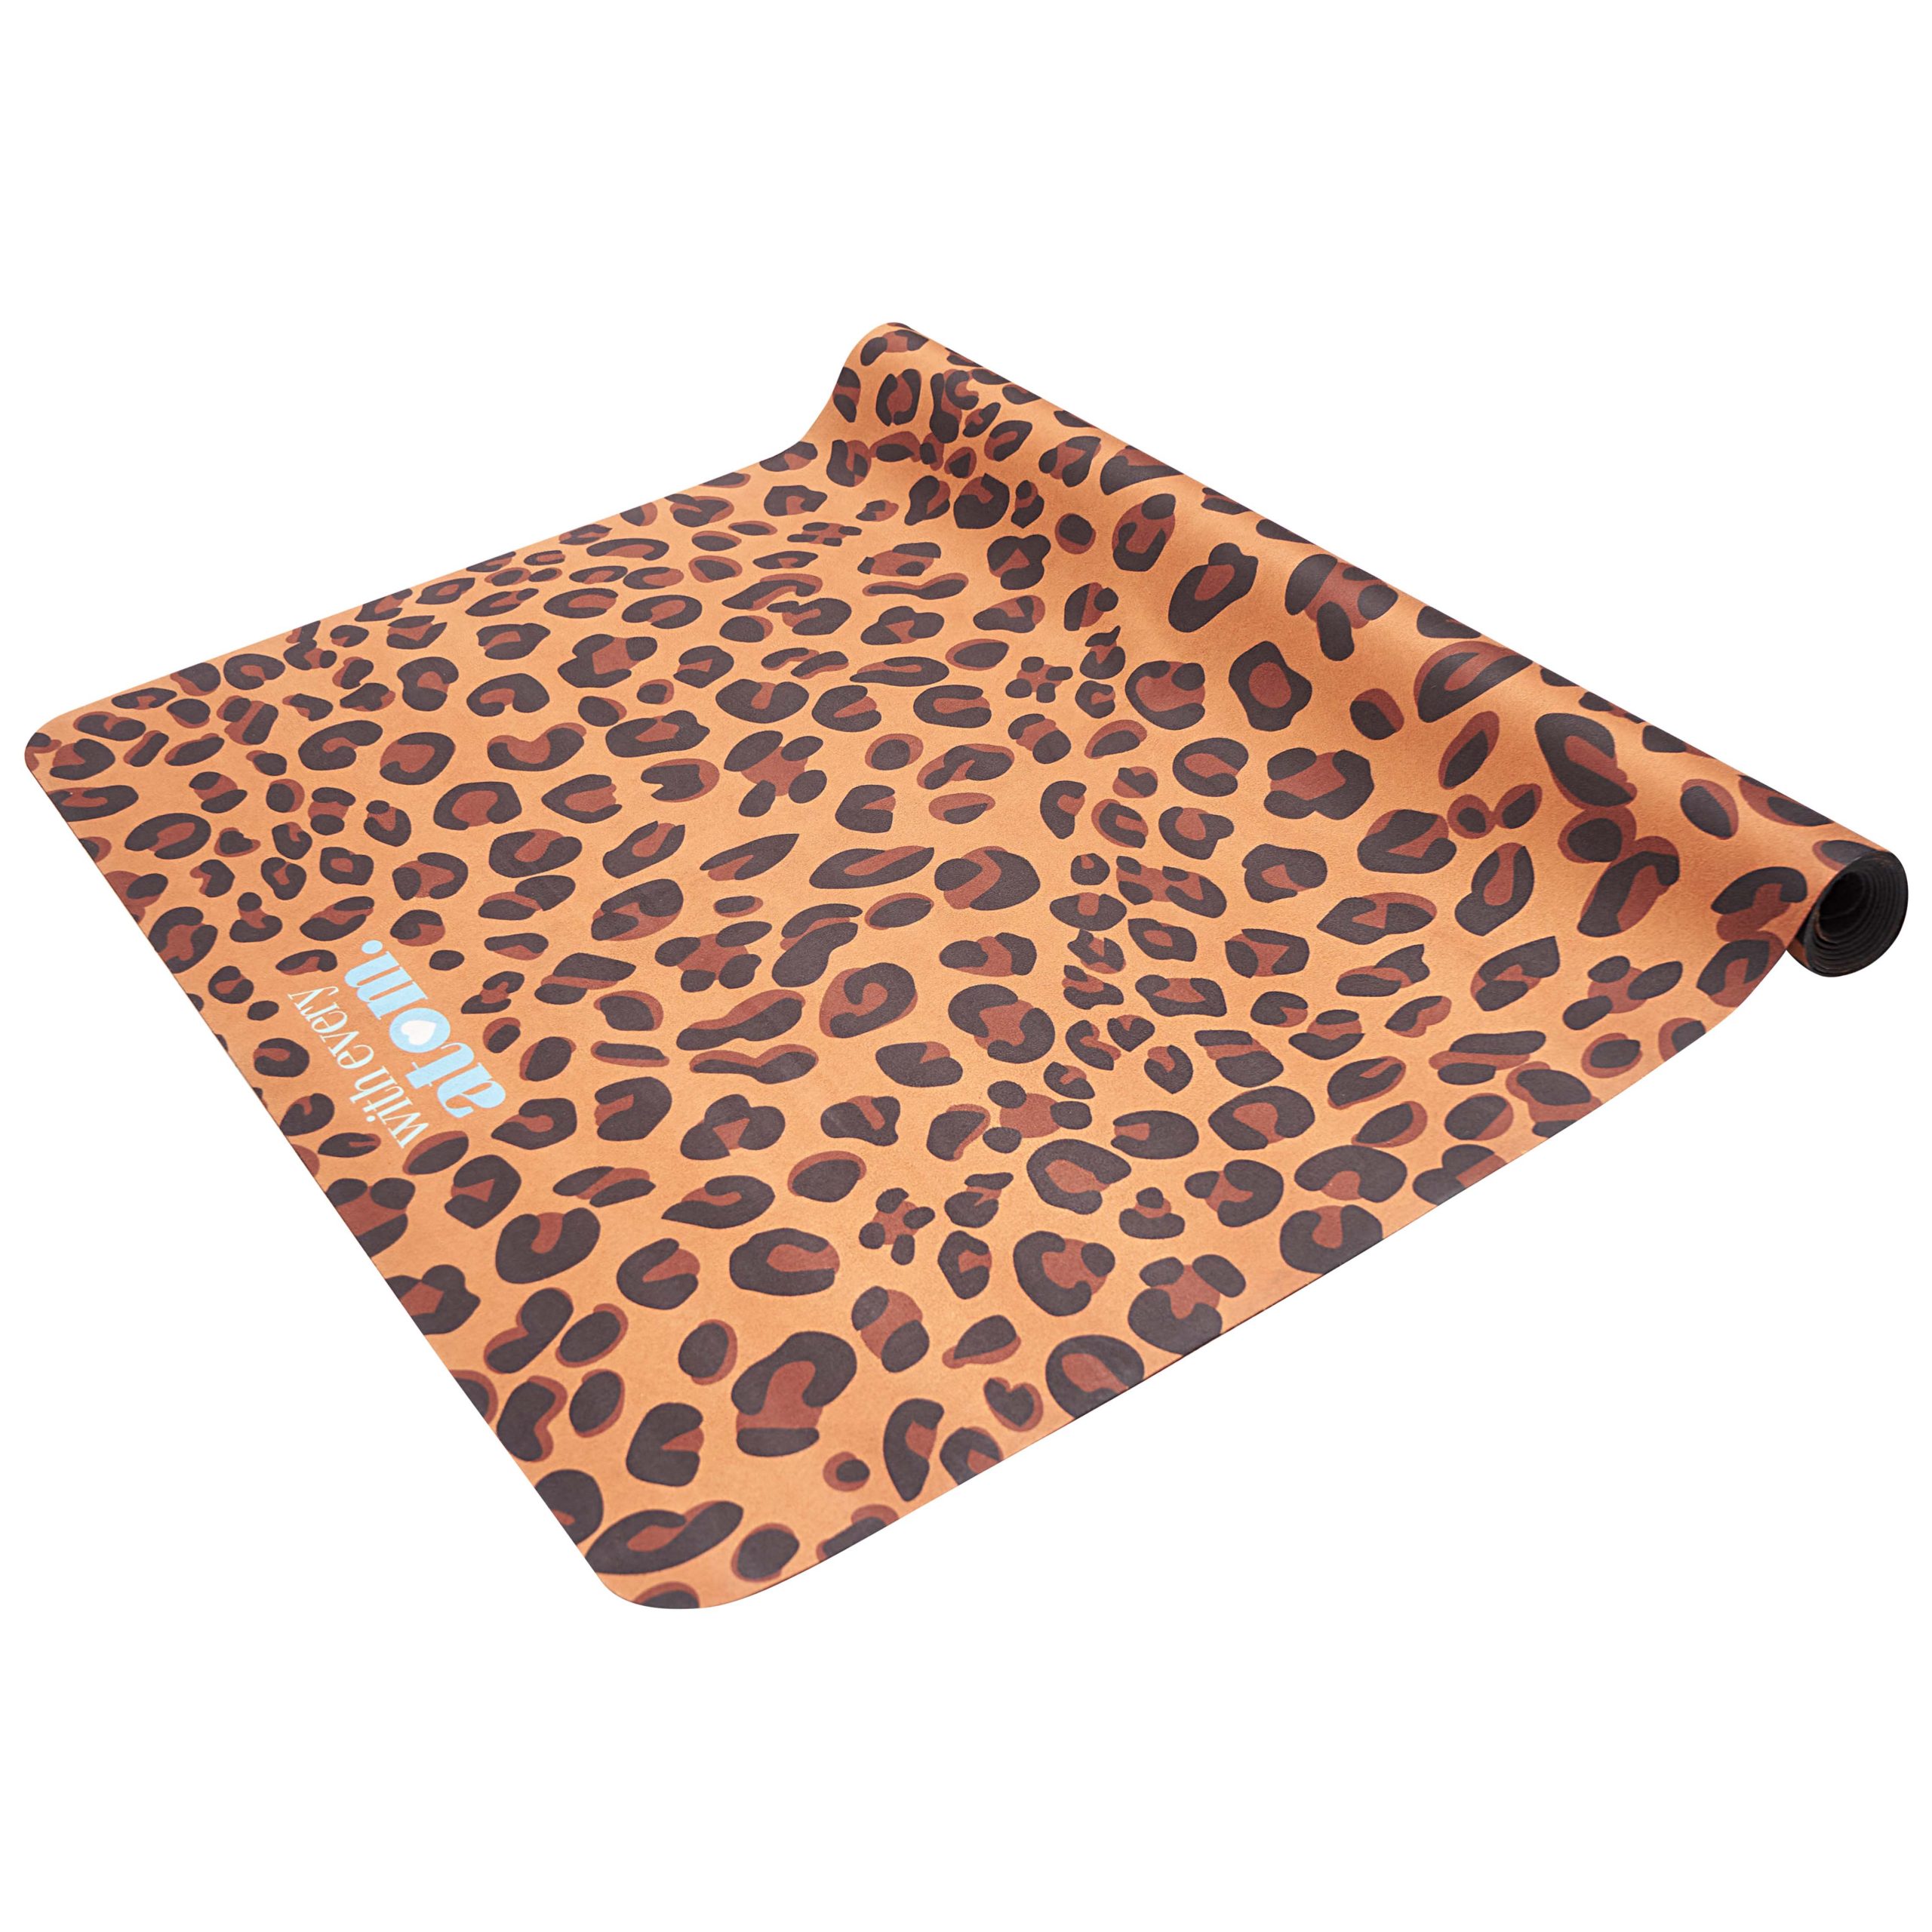 Leopard Print Yoga Mat with Anti-Slip Technology